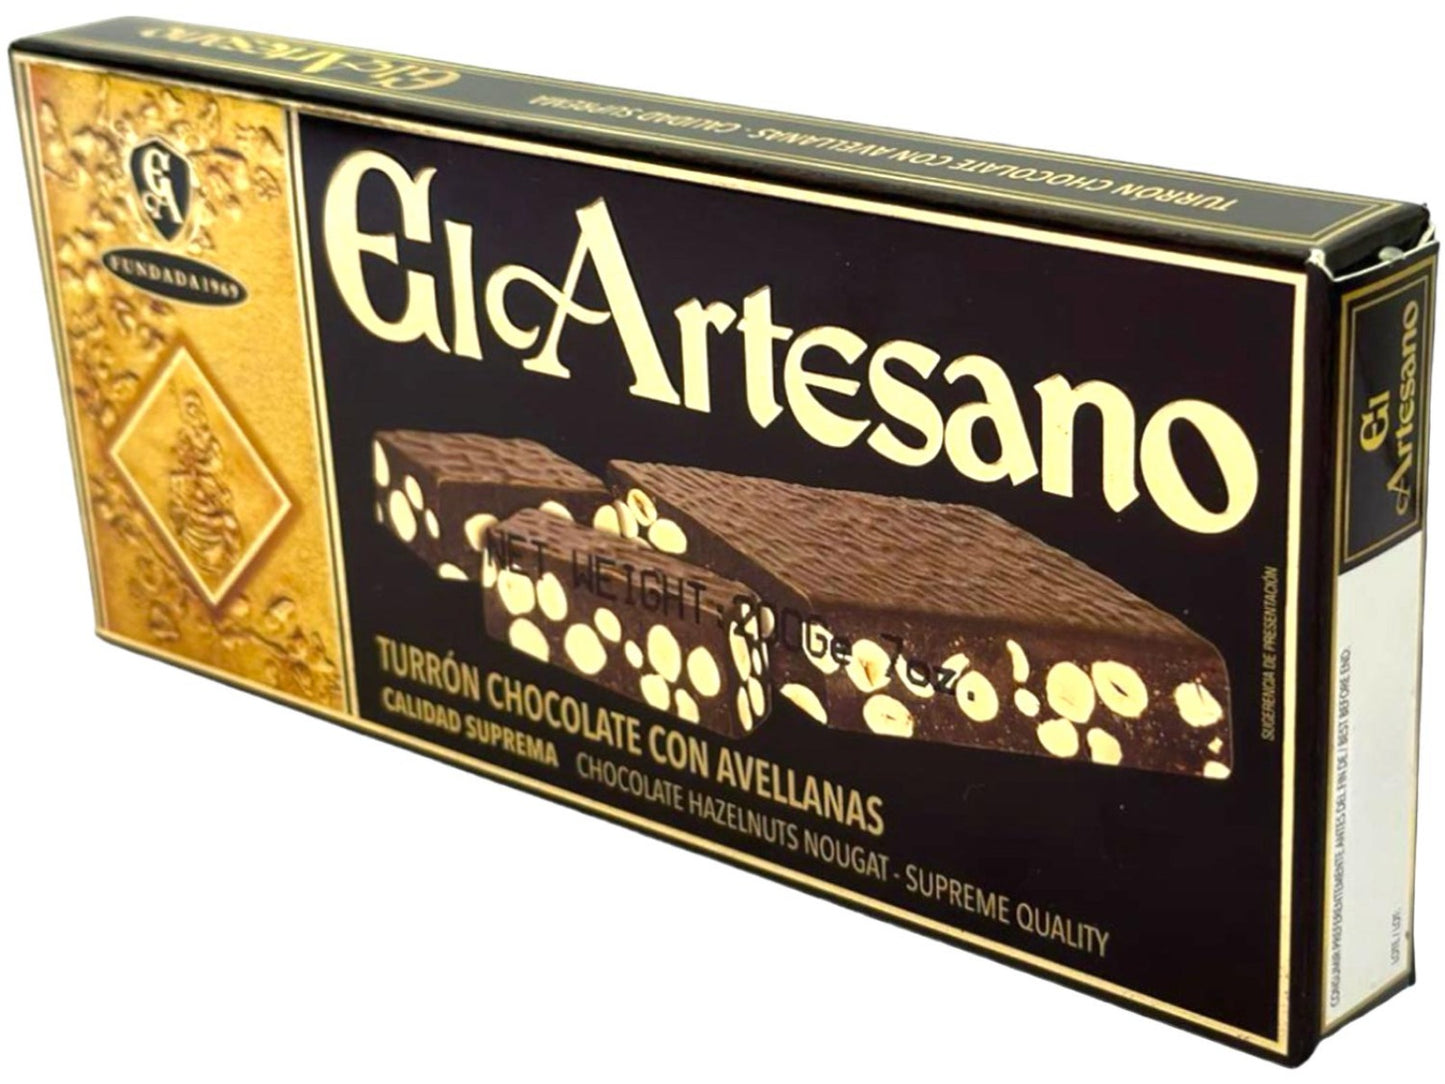 El Artesano Turron Chocolate Con Avellanas Spanish Chocolate Nougat With Hazelnuts 200g